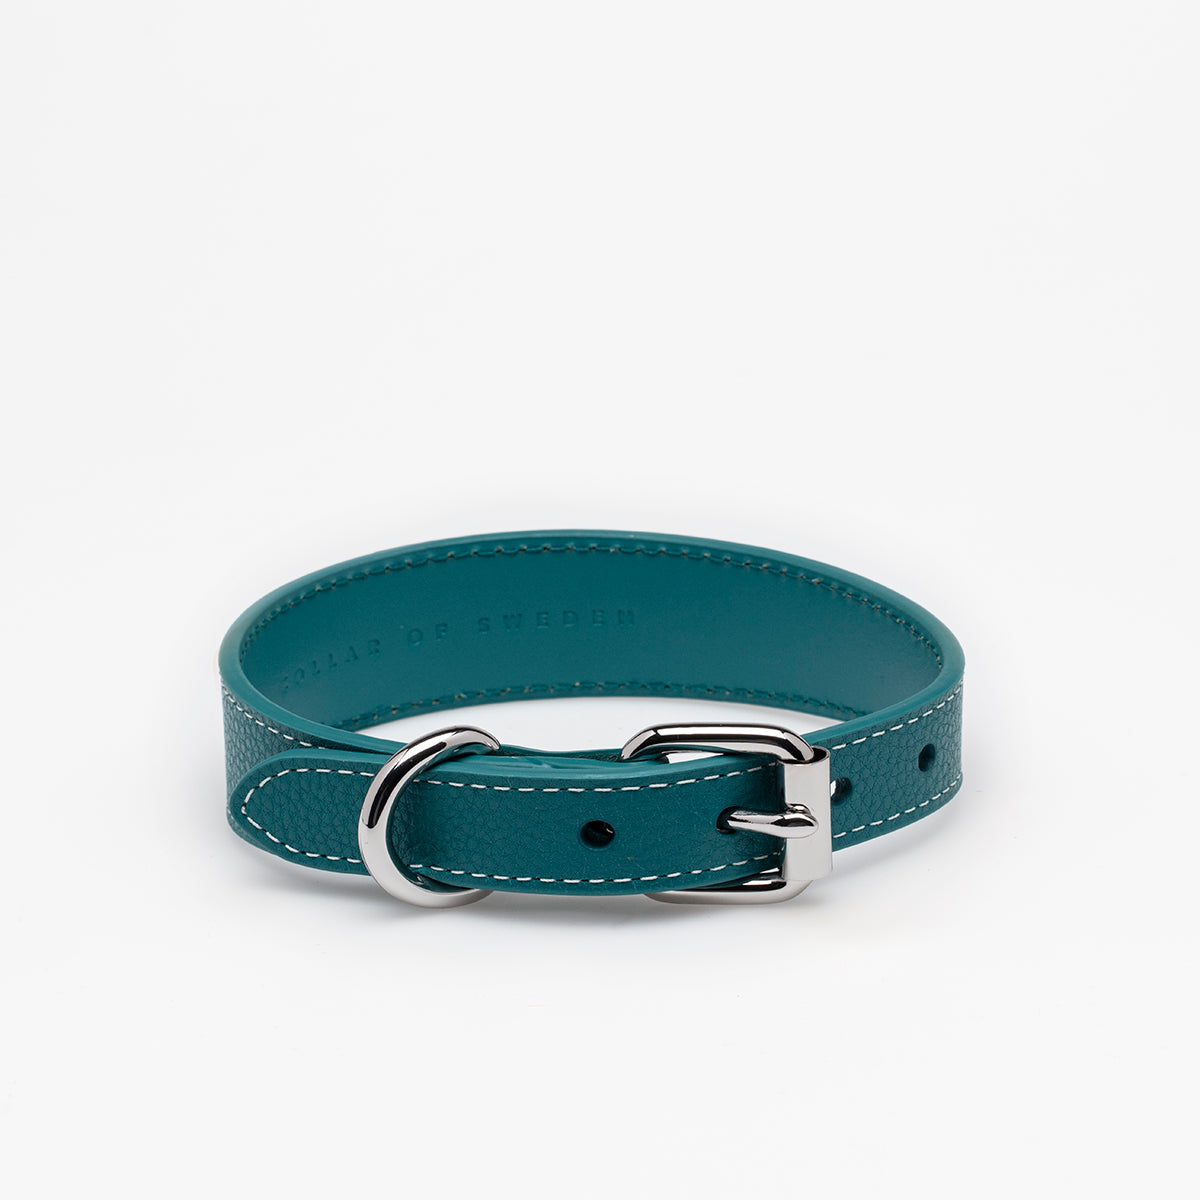 image - Turquoise Leather Collar Medium Thin